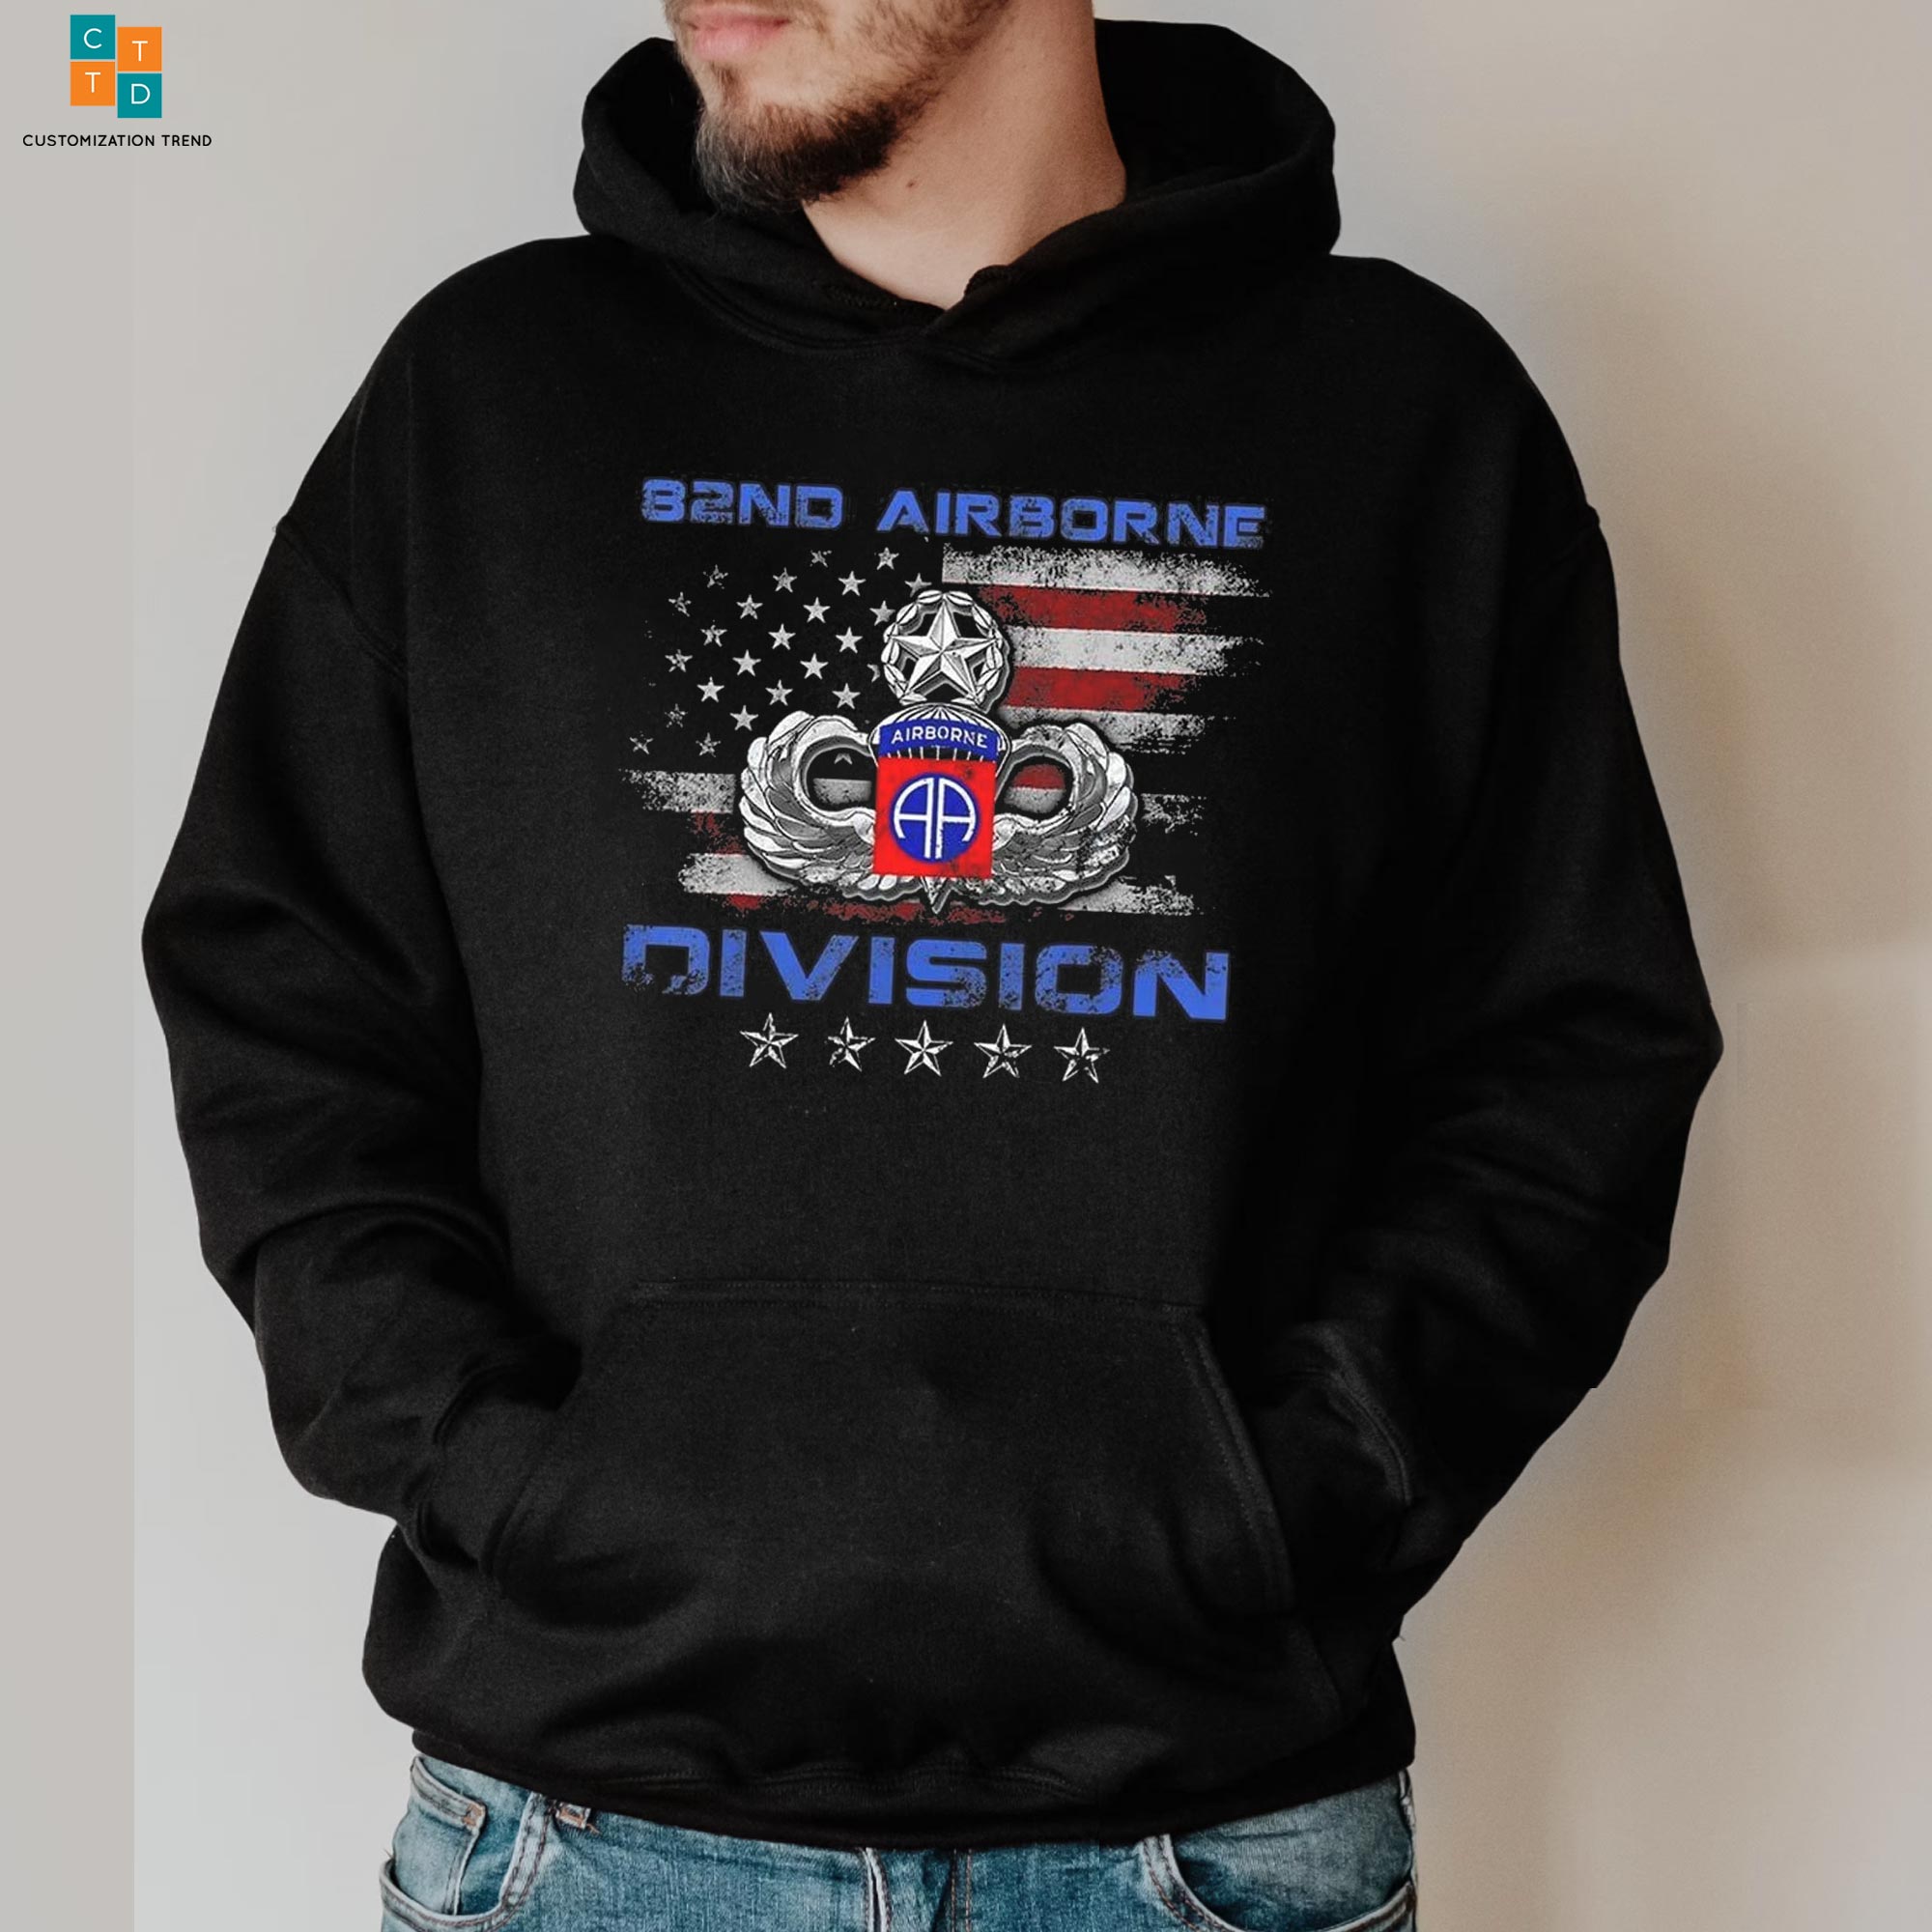 B2ND Airborne Division Flag Airborne Hoodie, Shirt